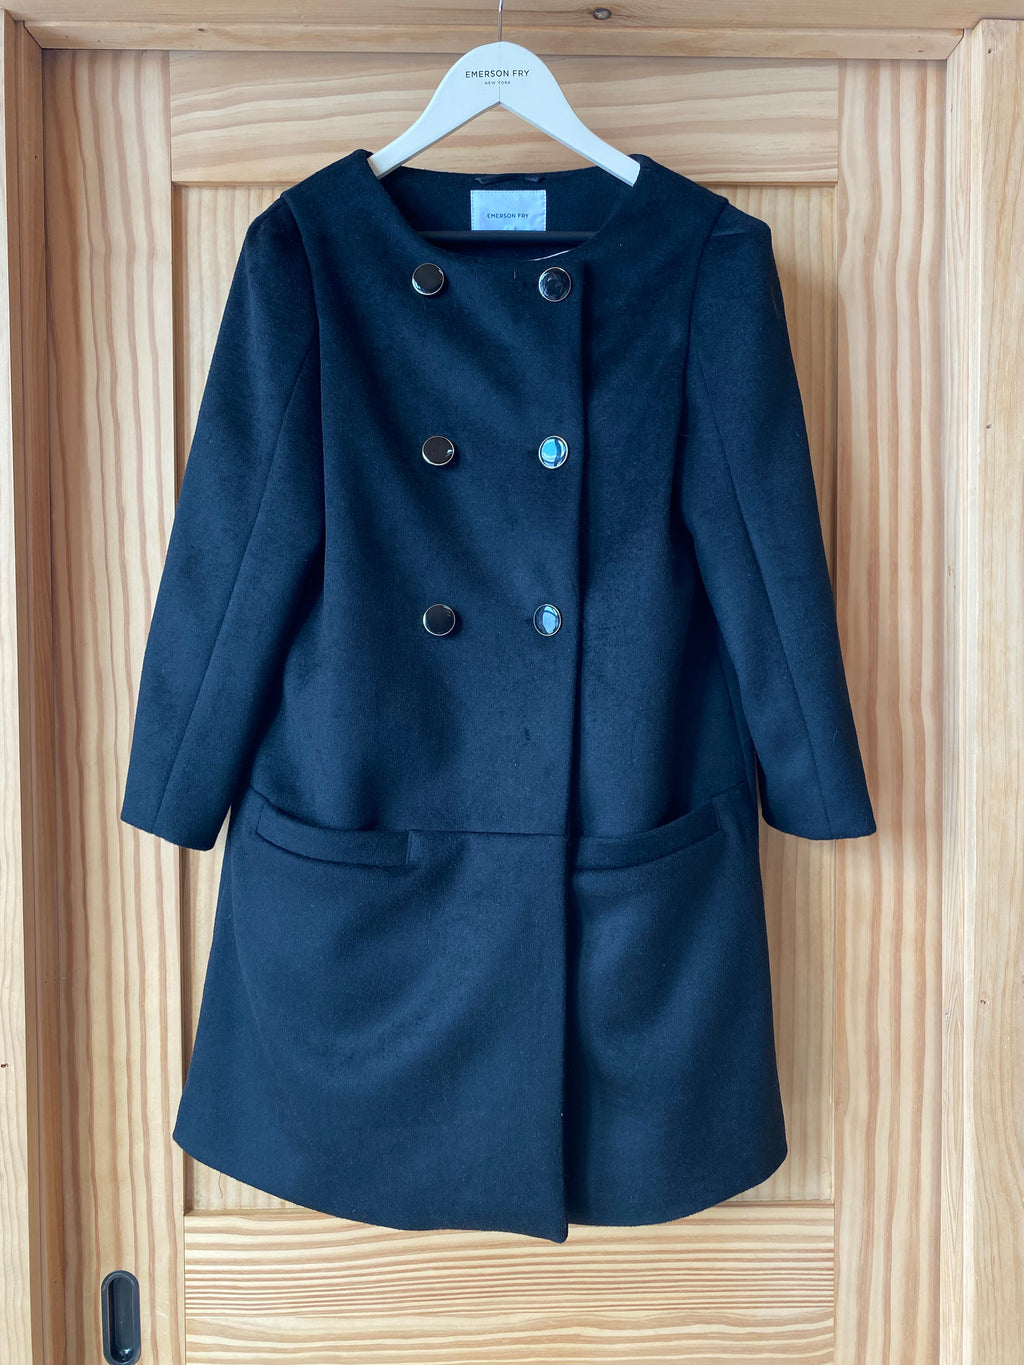 London Coat - Black Wool Cashmere